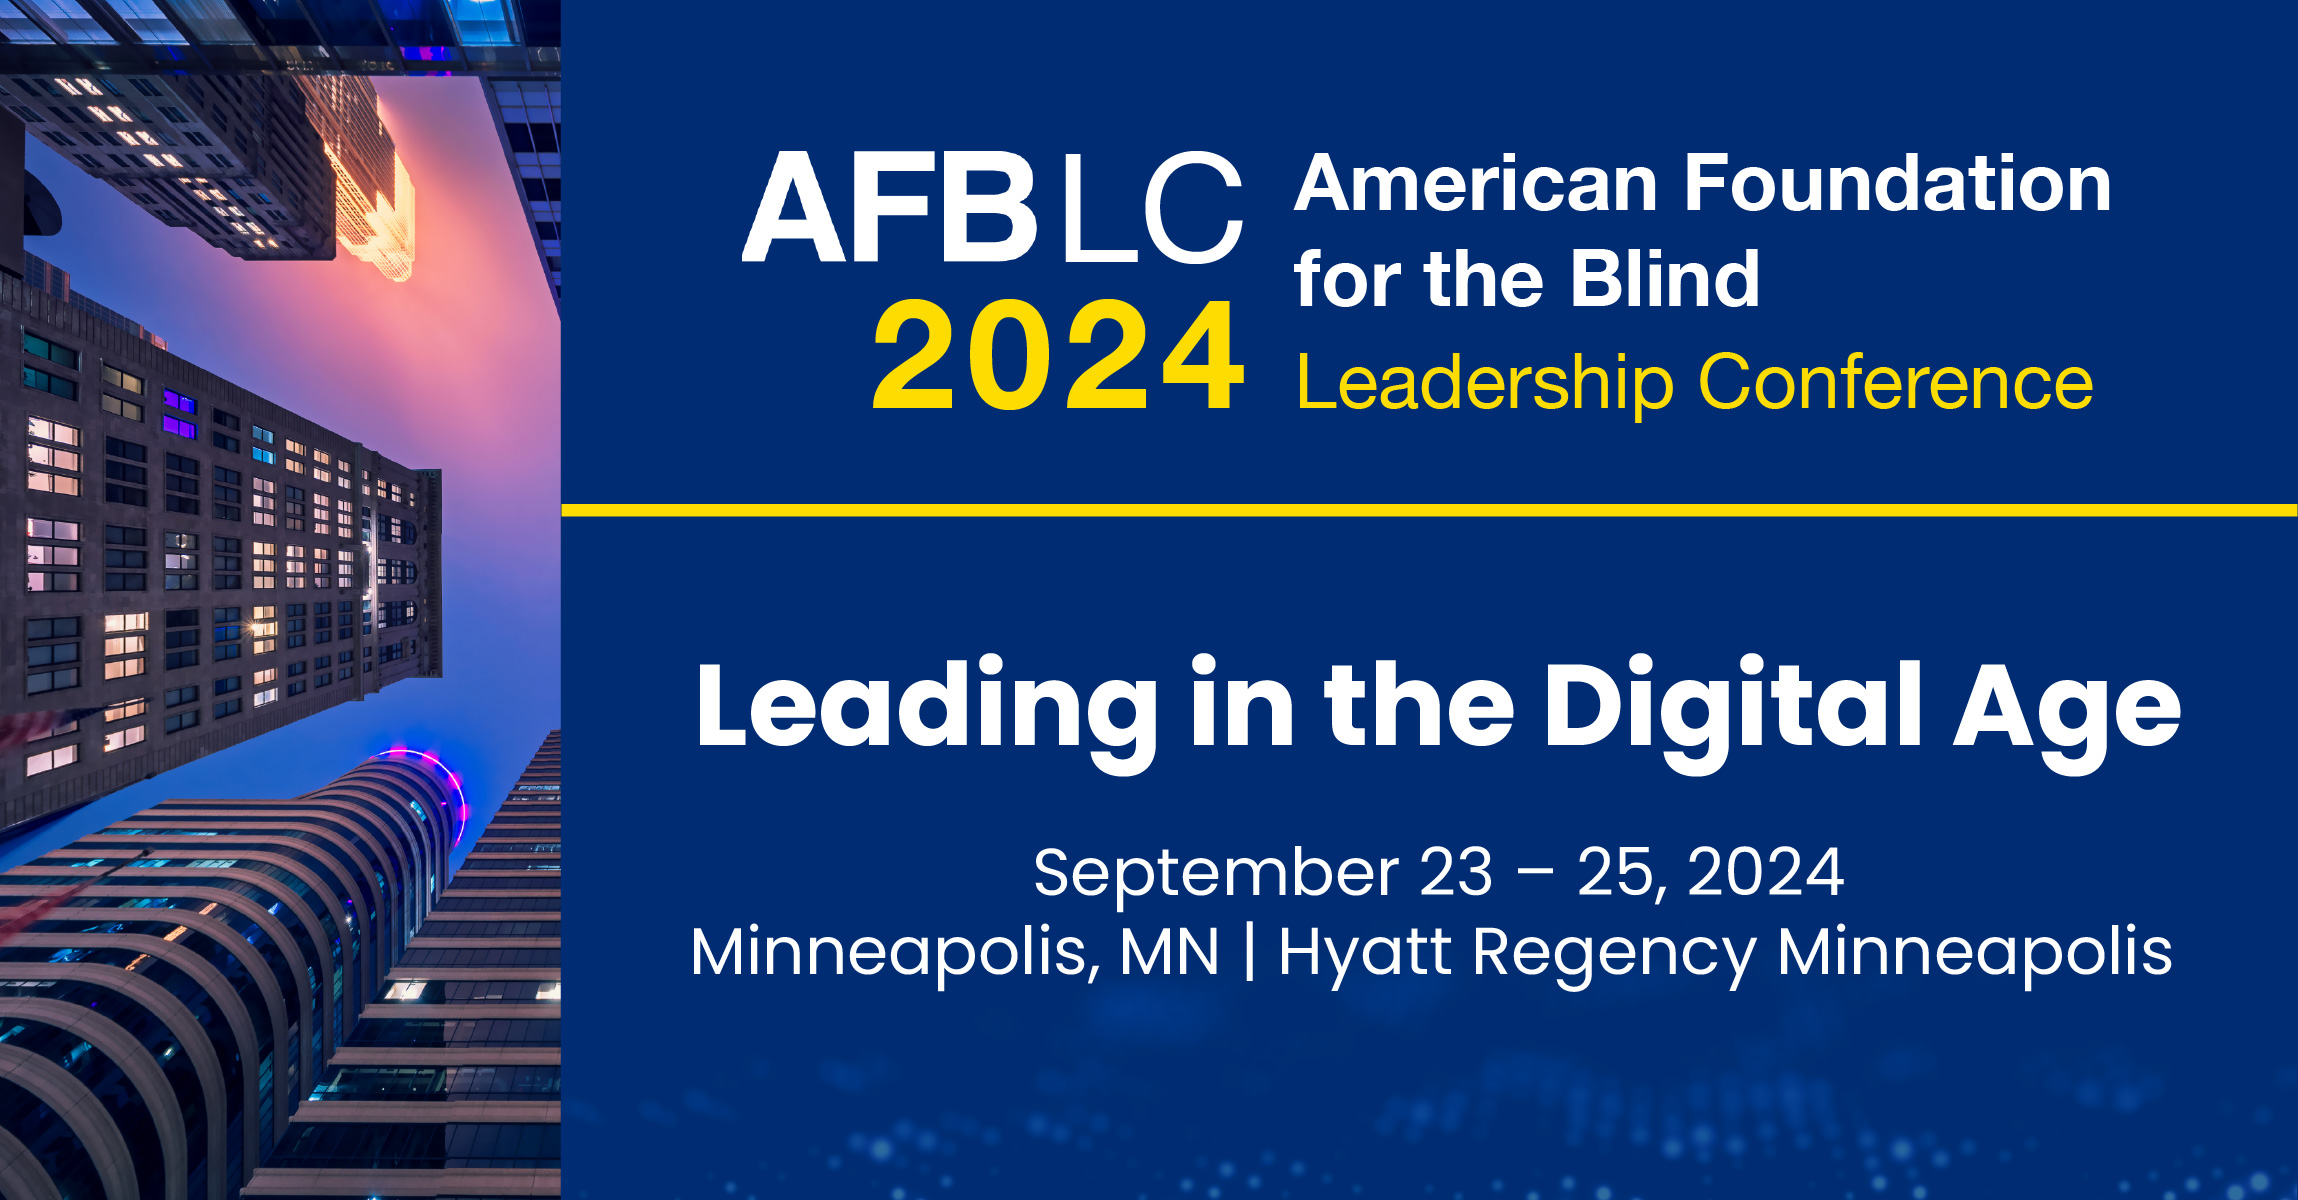 AFBLC 2024, American Foundation for the Blind Leadership Conference. Leading in the Digital Age. September 23 - 25, 2024. Minneapolis, MN, Hyatt Regency Minneapolis